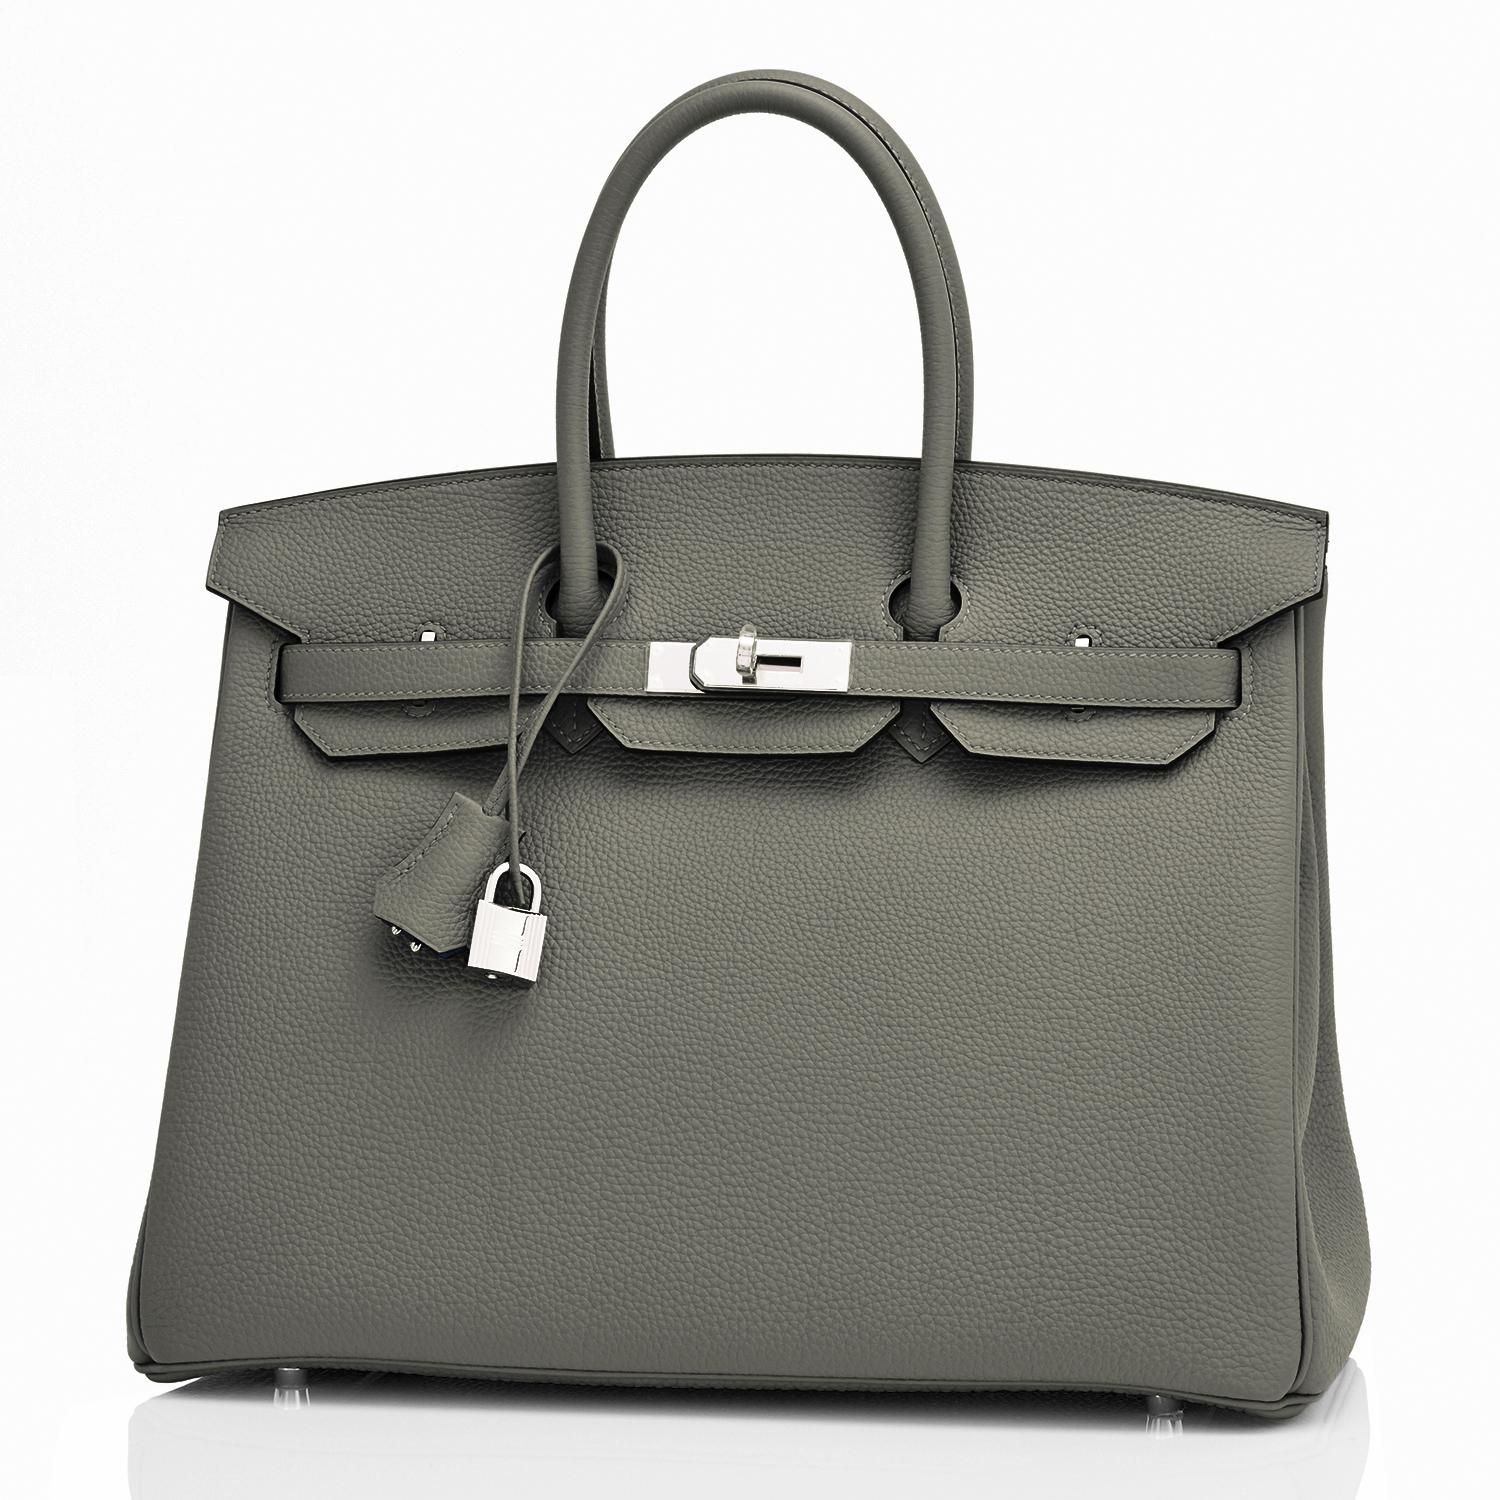  Sac Hermès Birkin 35 cm Vert de Gris vert gris Togo Palladium Tampon Y, 2020 Unisexe 